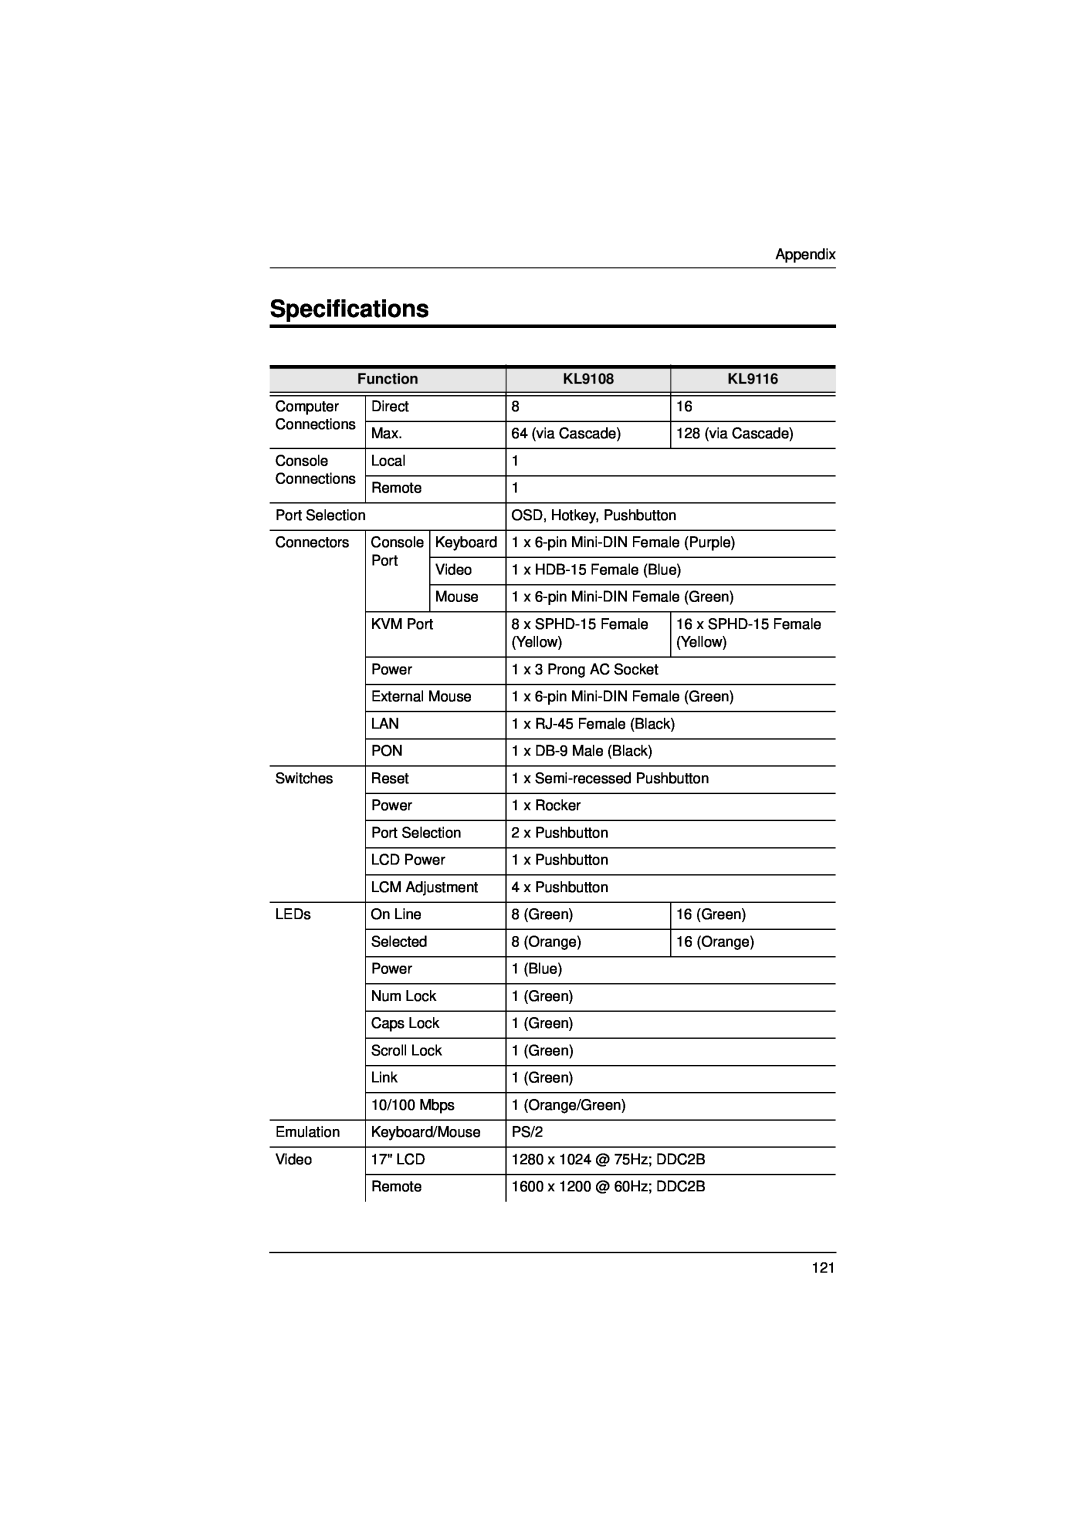 ATEN Technology KL9116 user manual Specifications, Function, KL9108, Appendix 